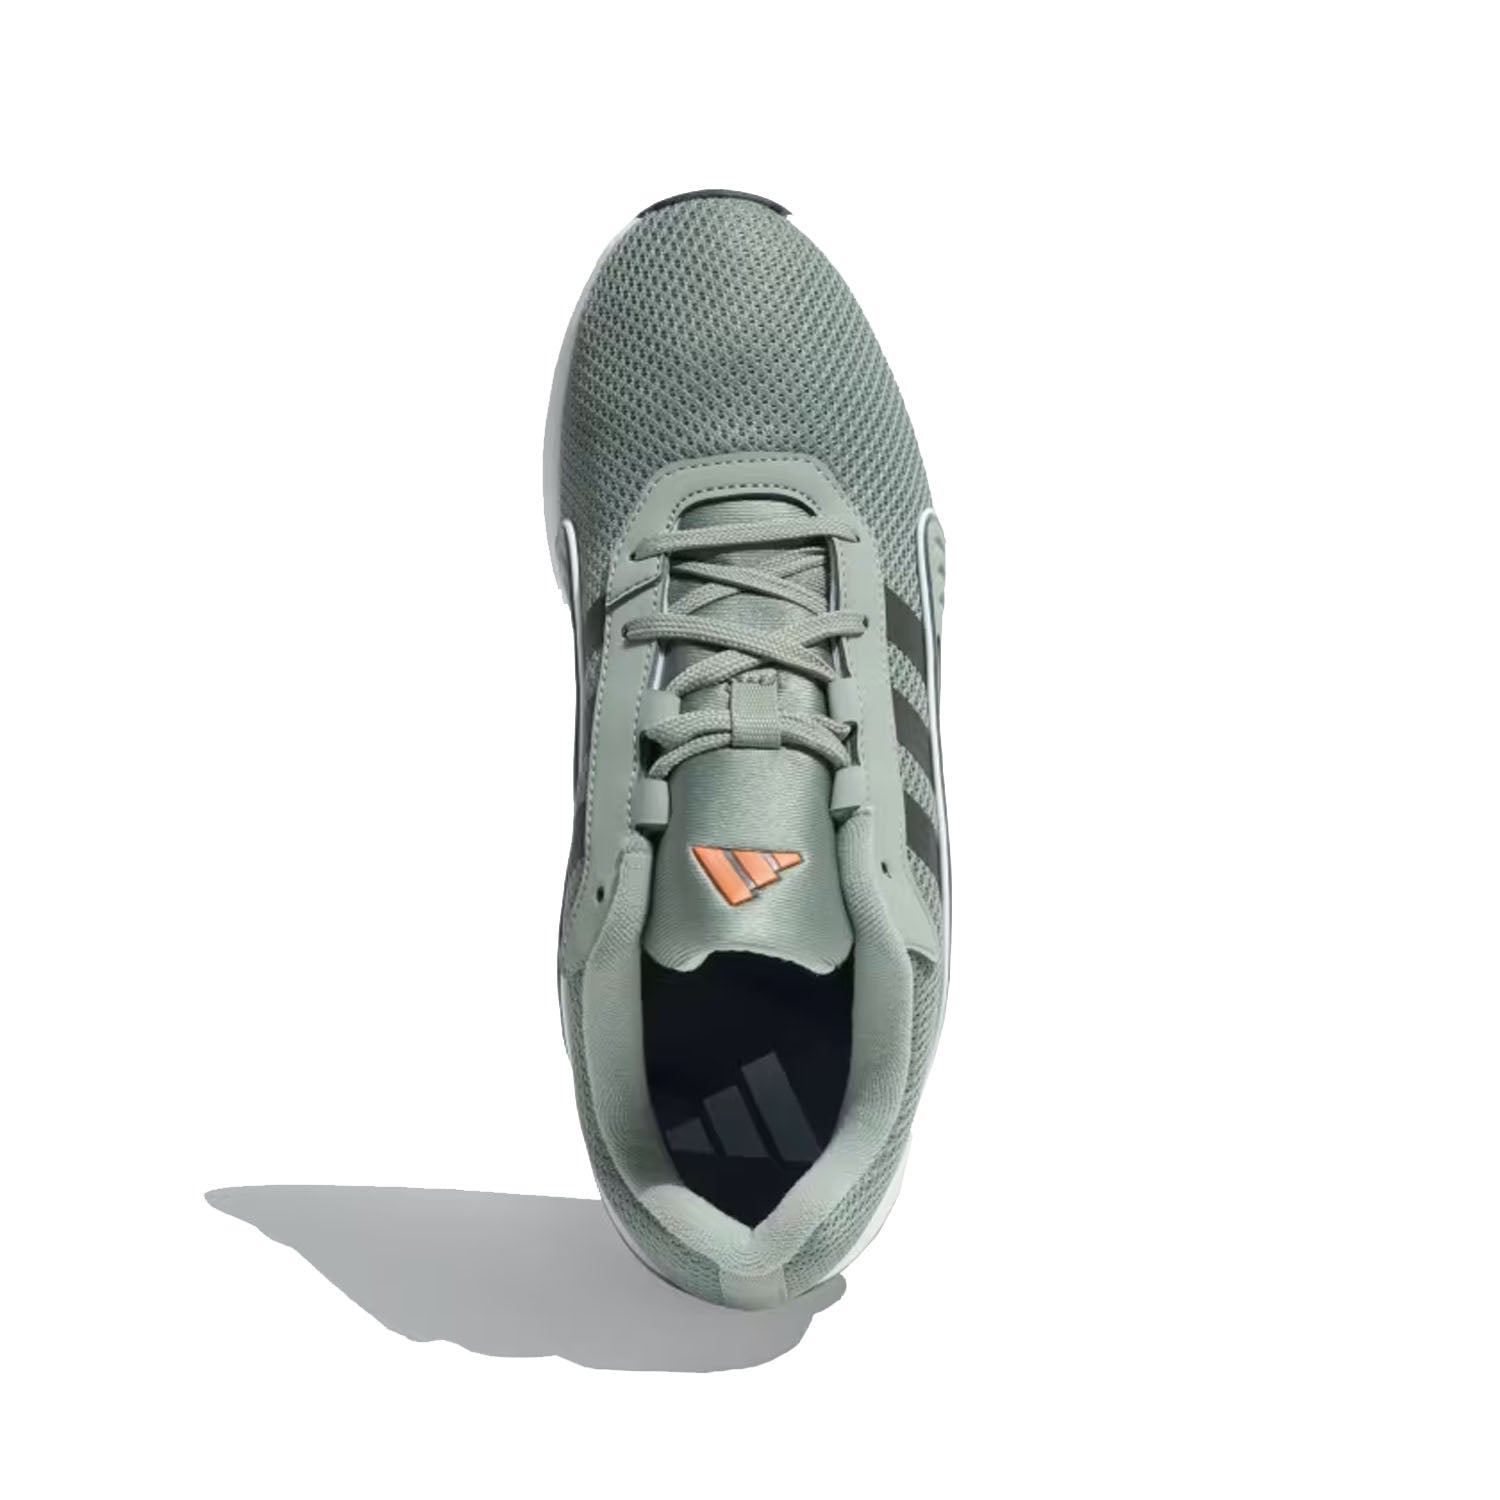 Adidas Gleiten Men's Running Shoe, Silver Green/Core Black/Semi Impact Orange/Cloud White - Best Price online Prokicksports.com